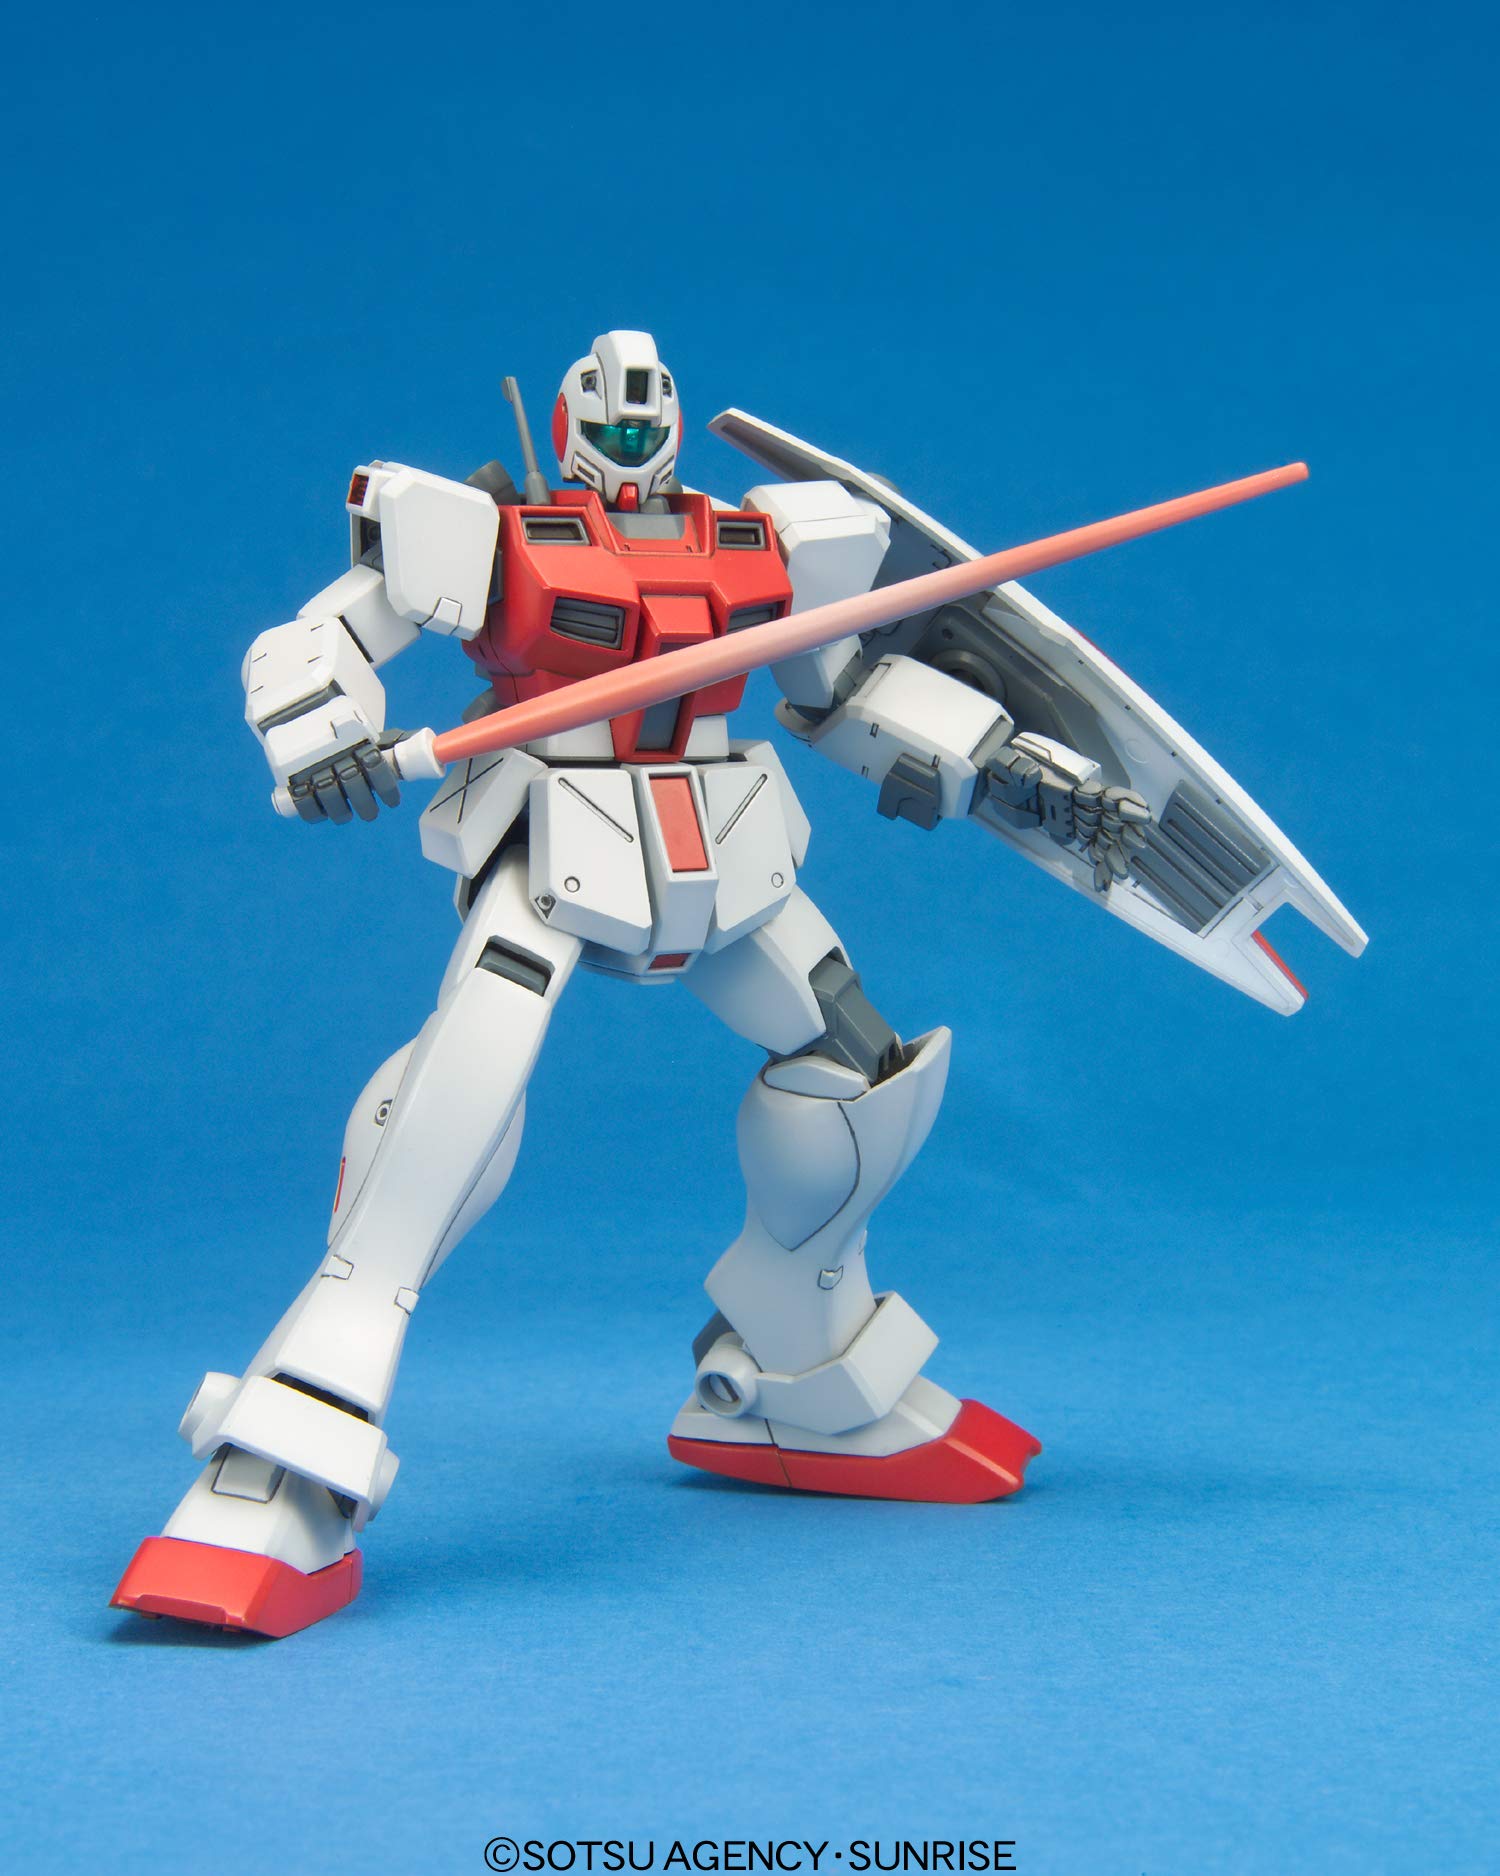 HGUC 1/144 GM Command Space - High Grade Mobile Suit Gundam 0080: War in the Pocket | Glacier Hobbies